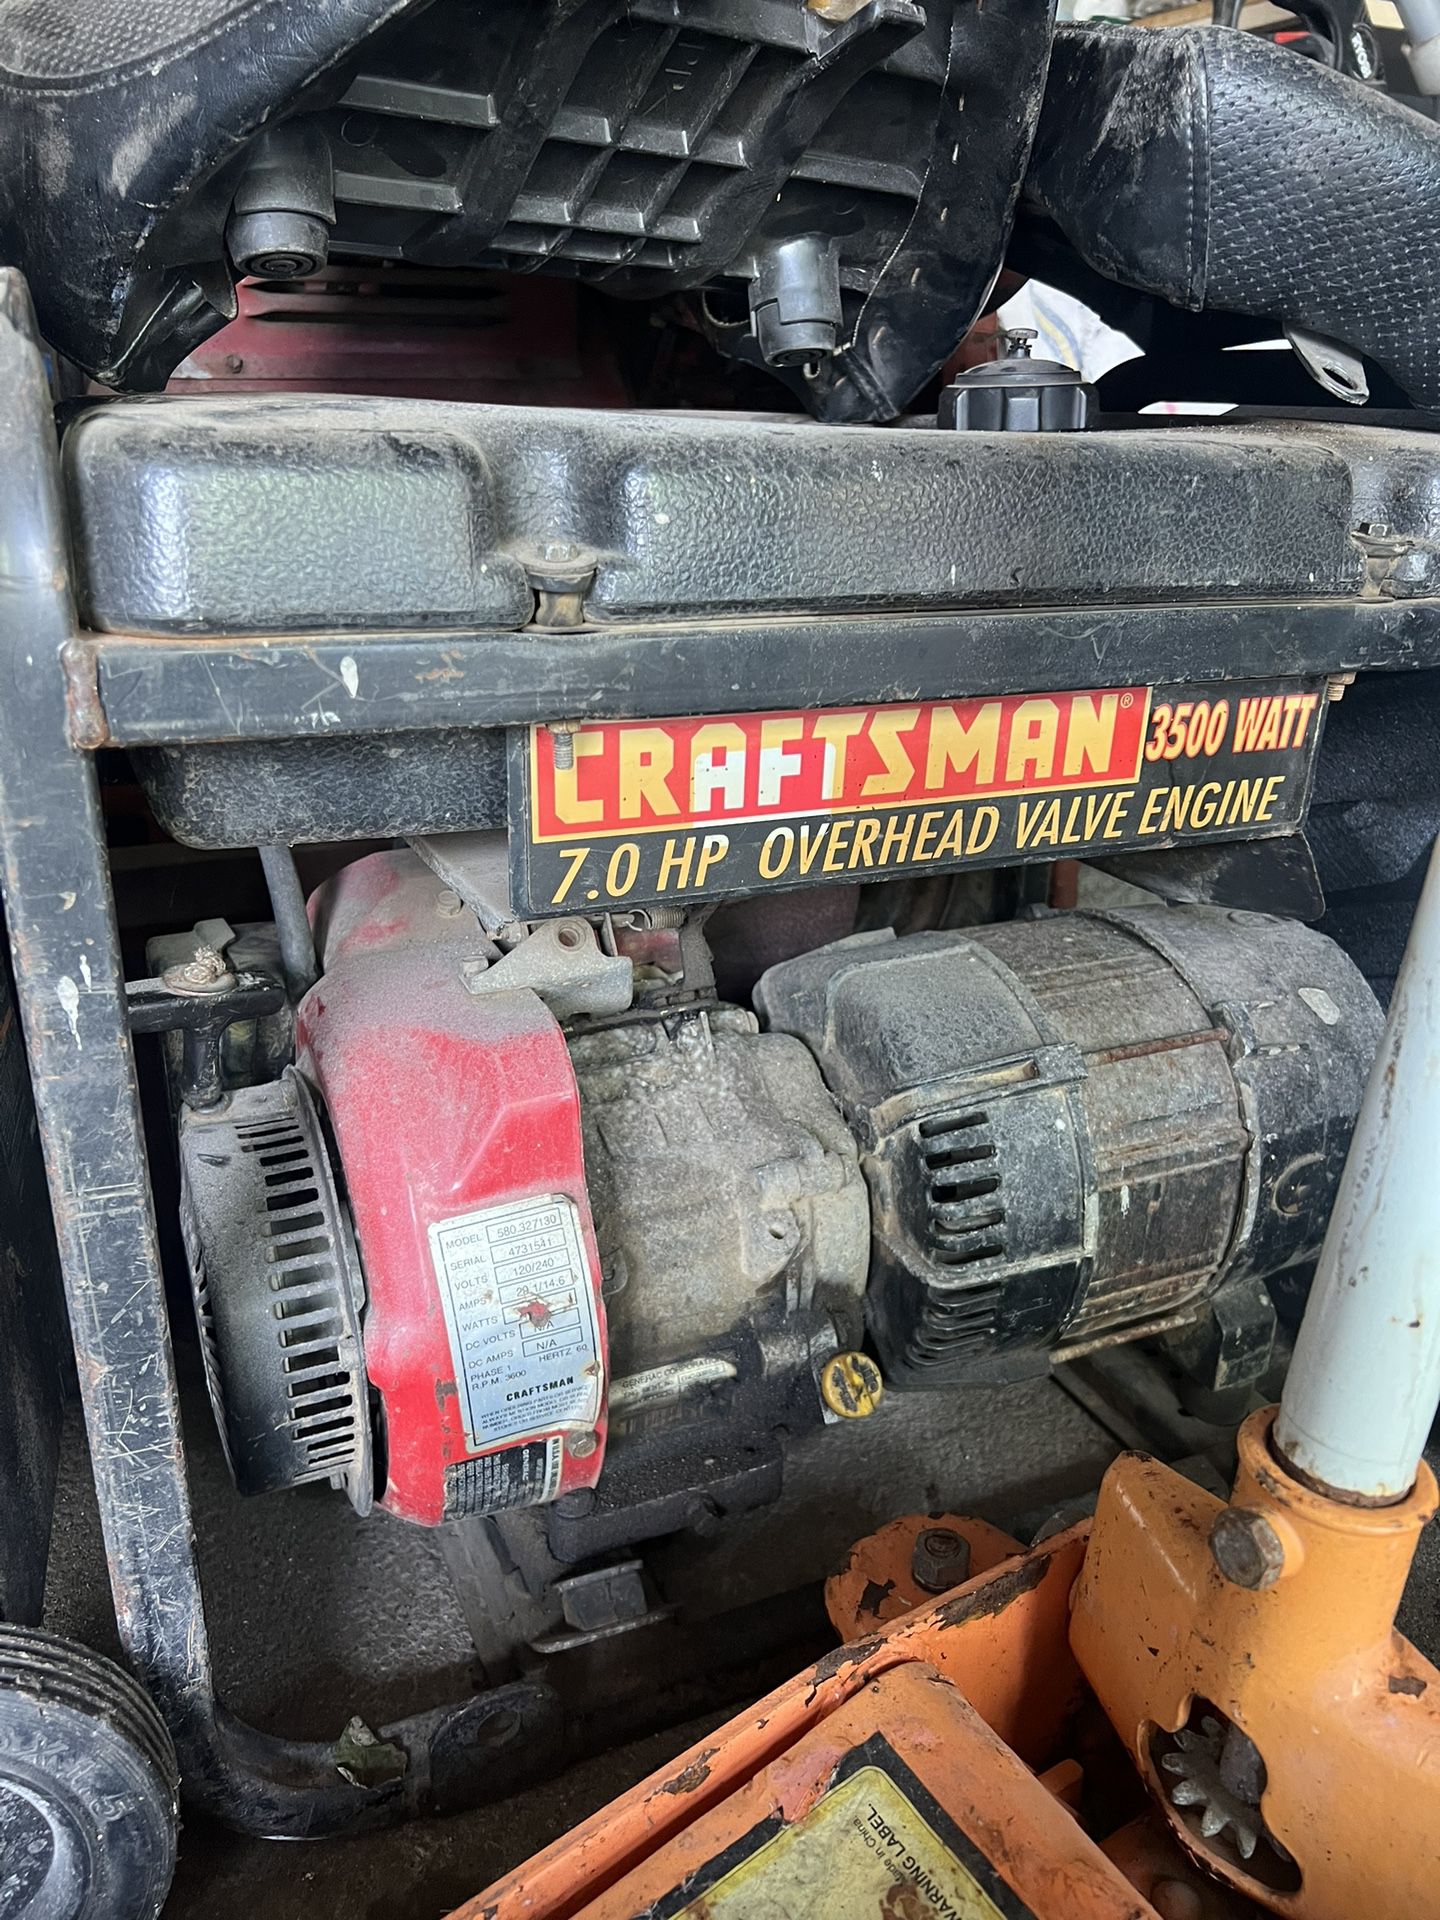 Craftsman Generator